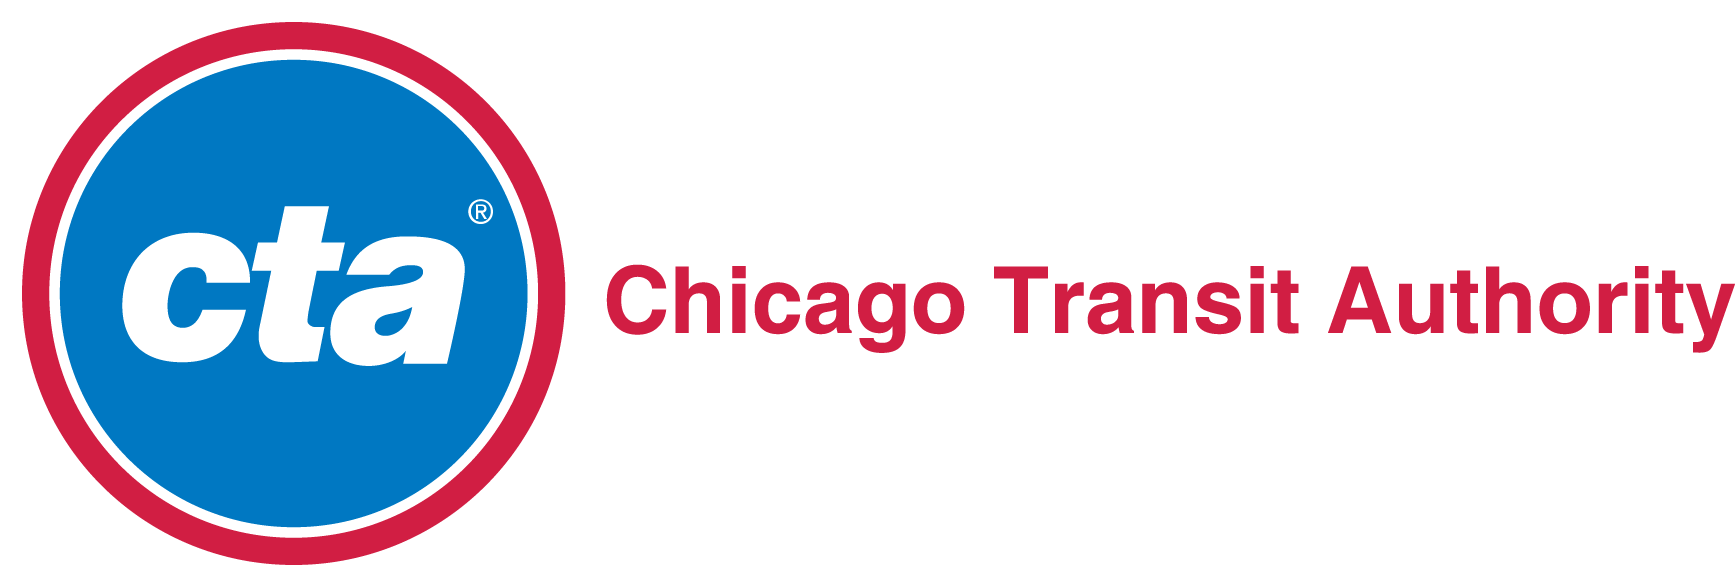 Chicago Transit Authority Logo - Chicago Transit Authority Announces Next Step Making Rail System